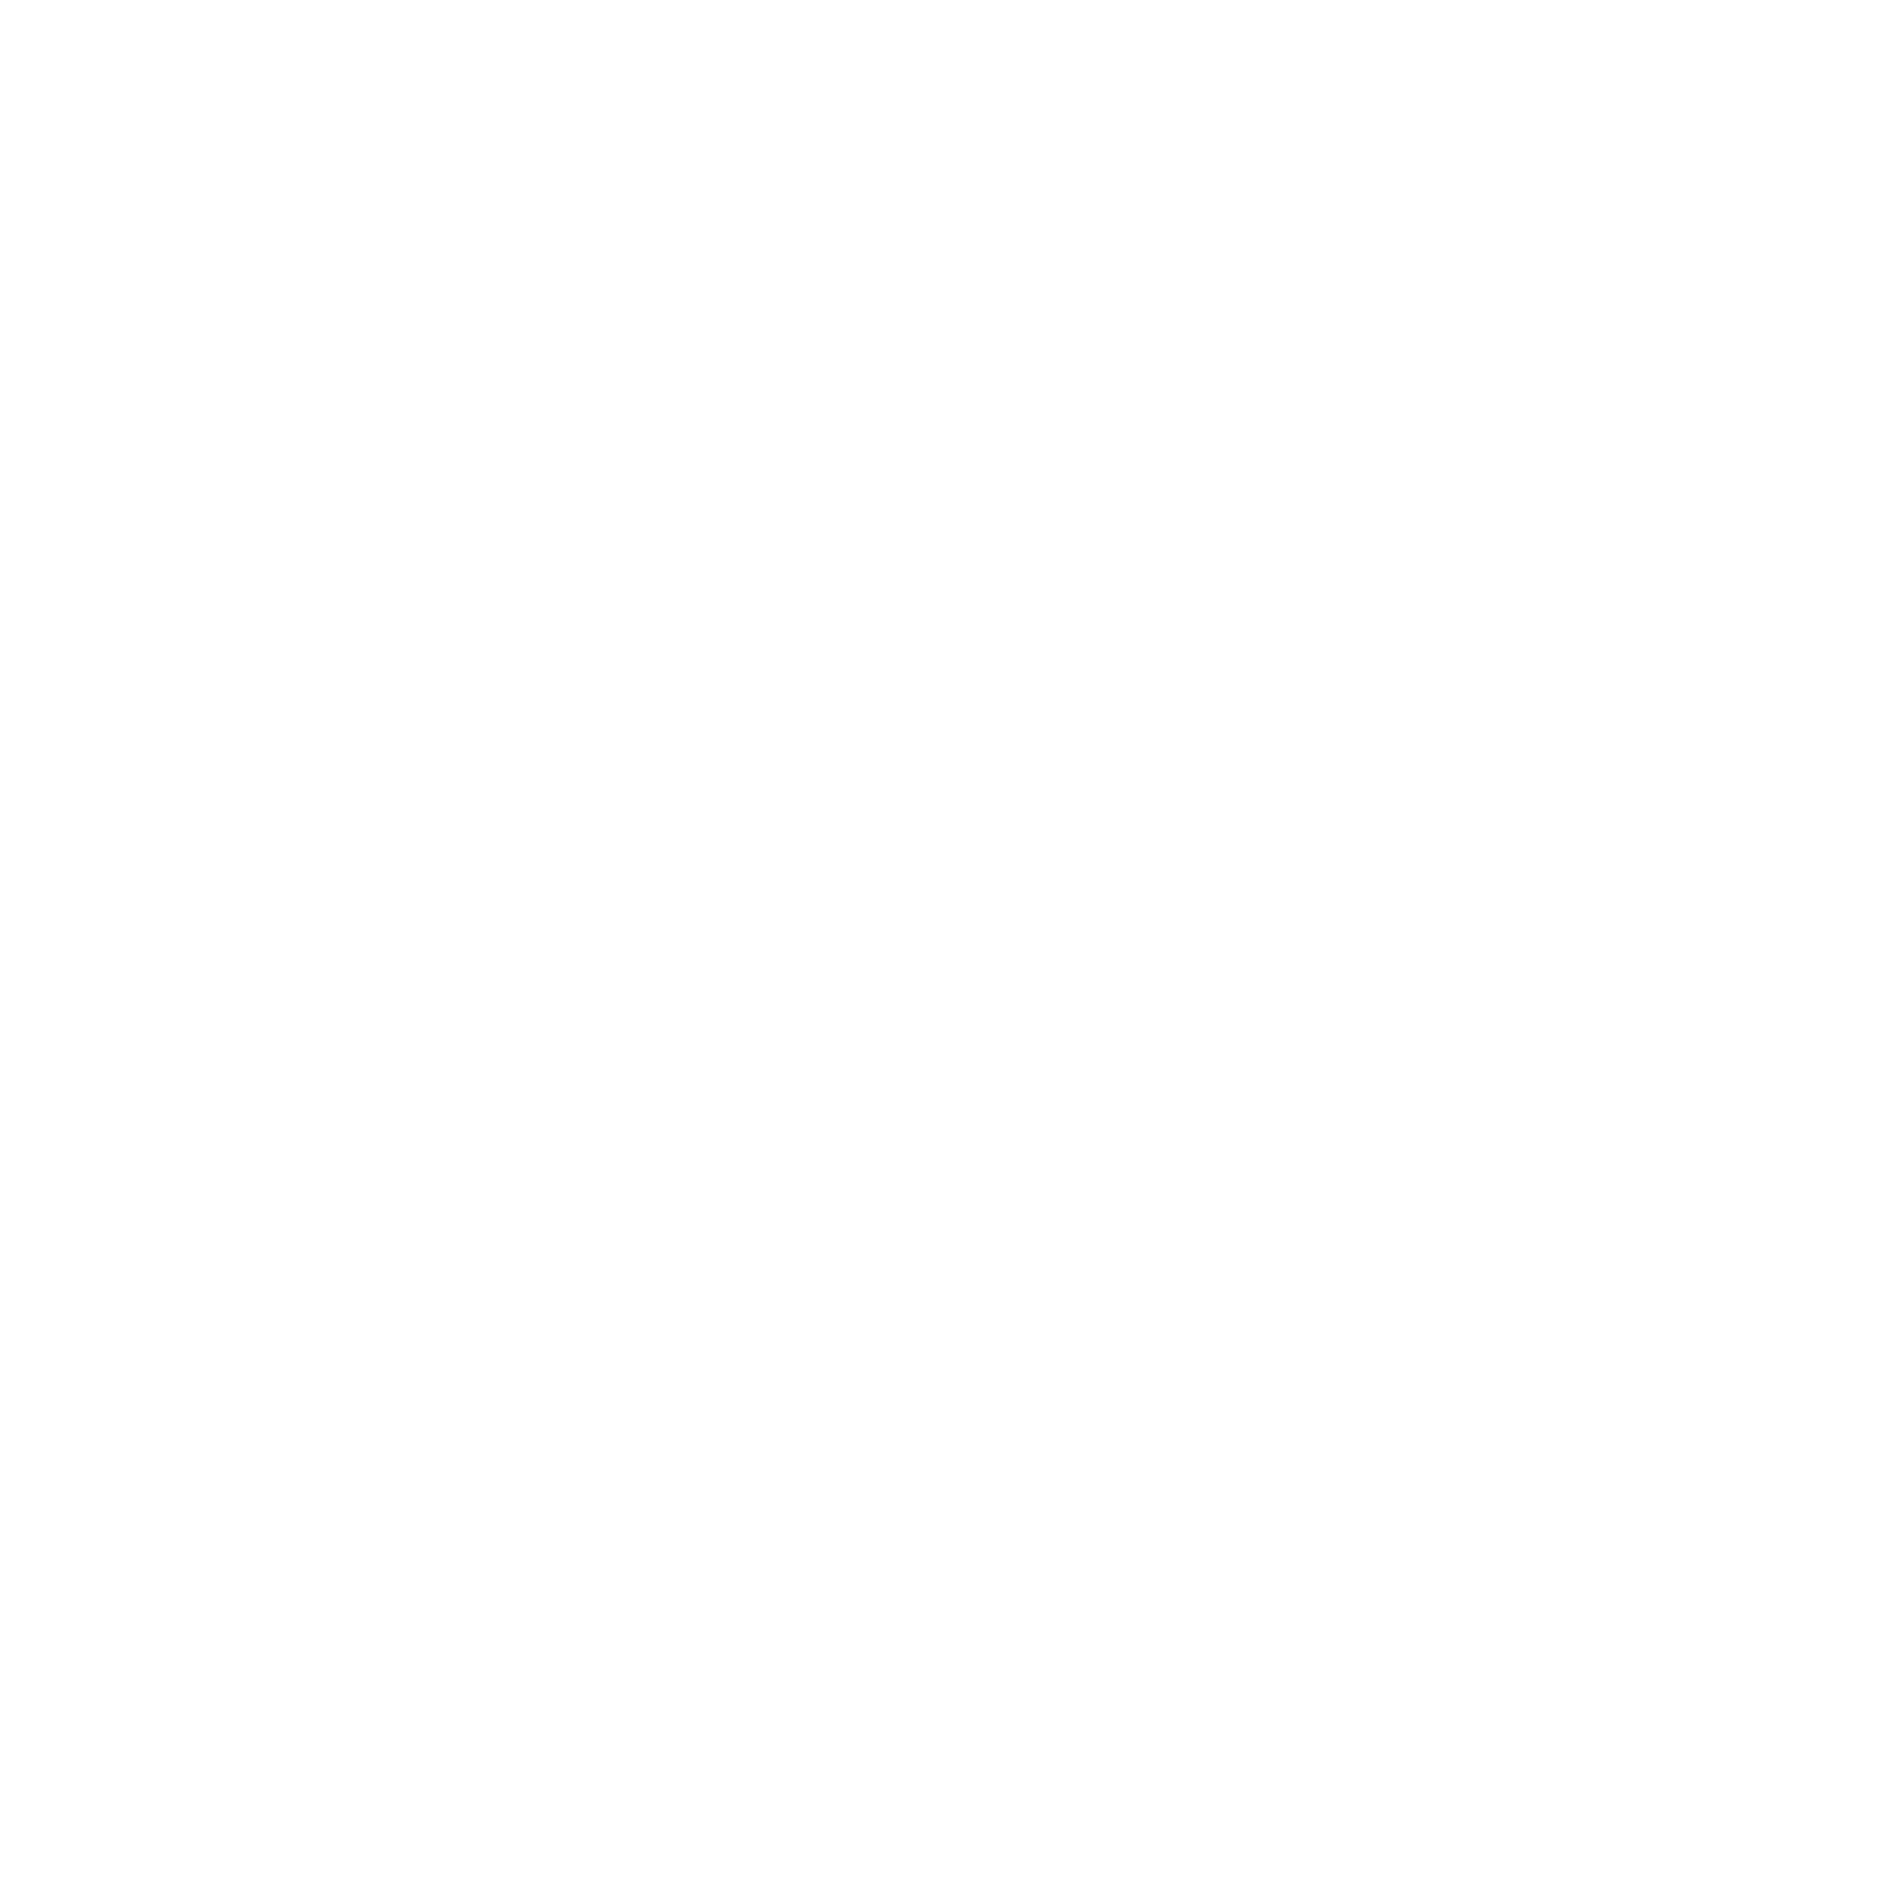 reference link to LinkedIn